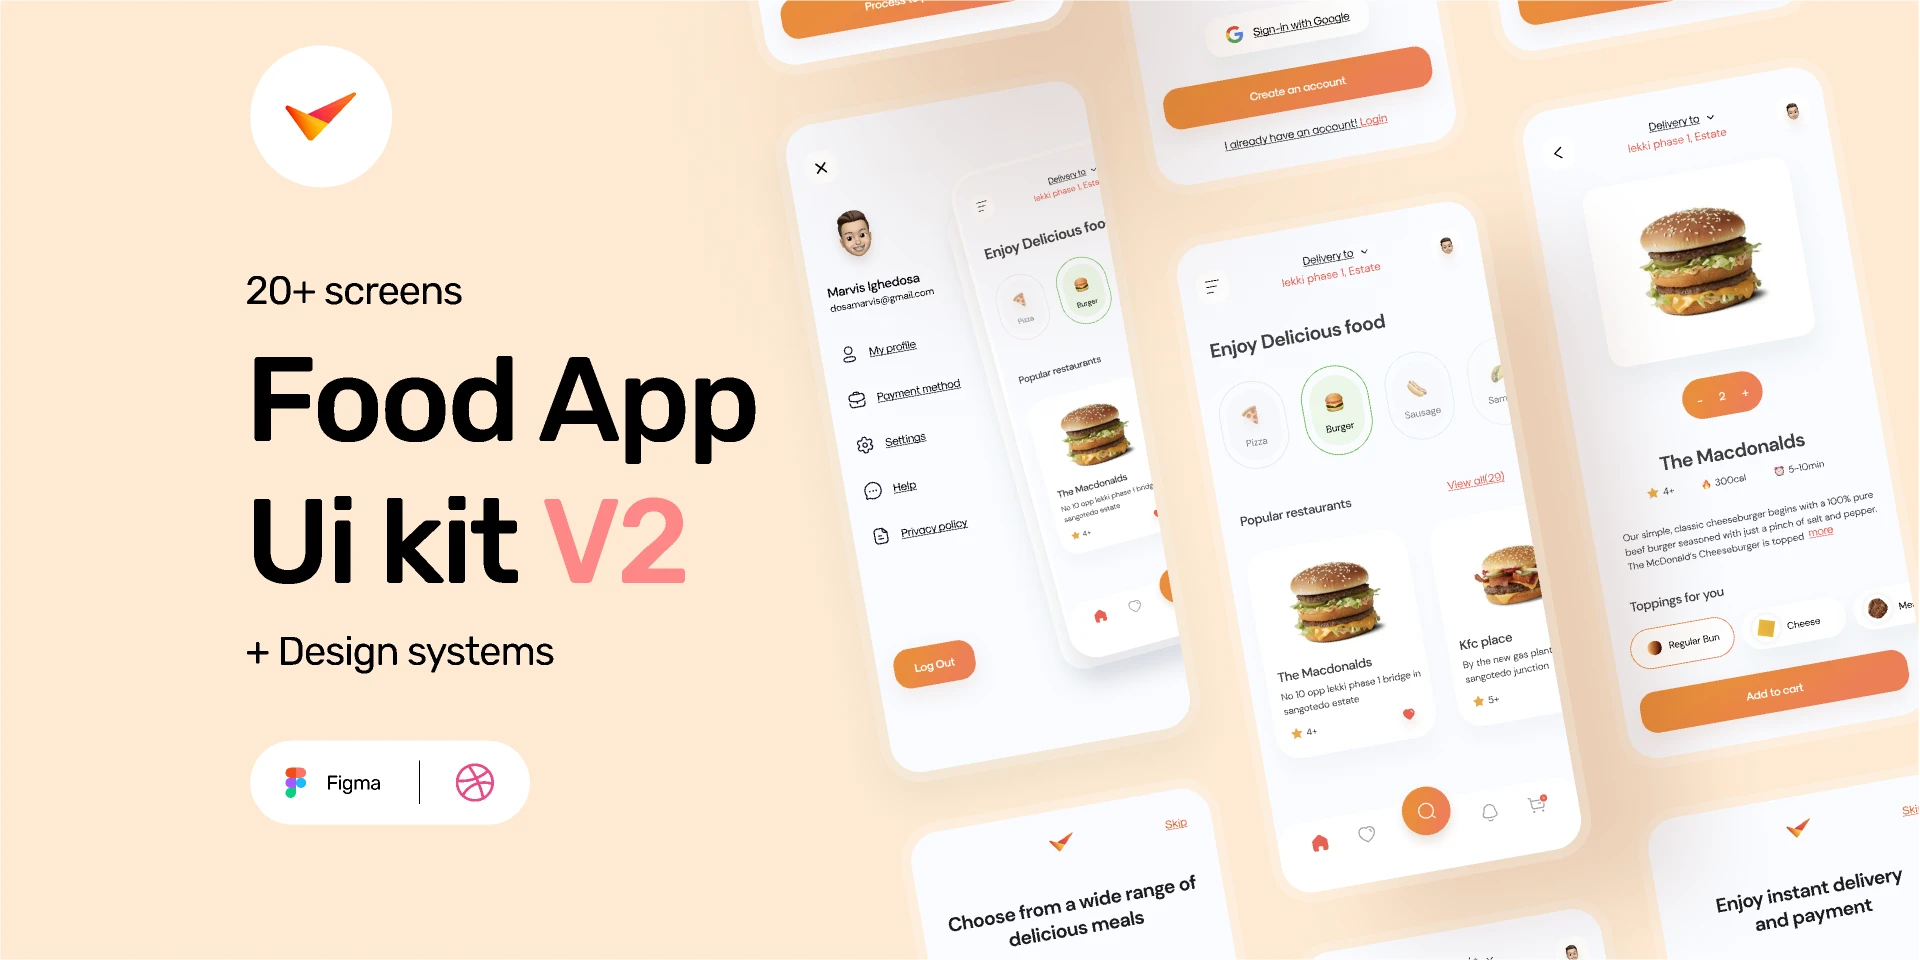 Food App Ui Kit v2 for Figma and Adobe XD